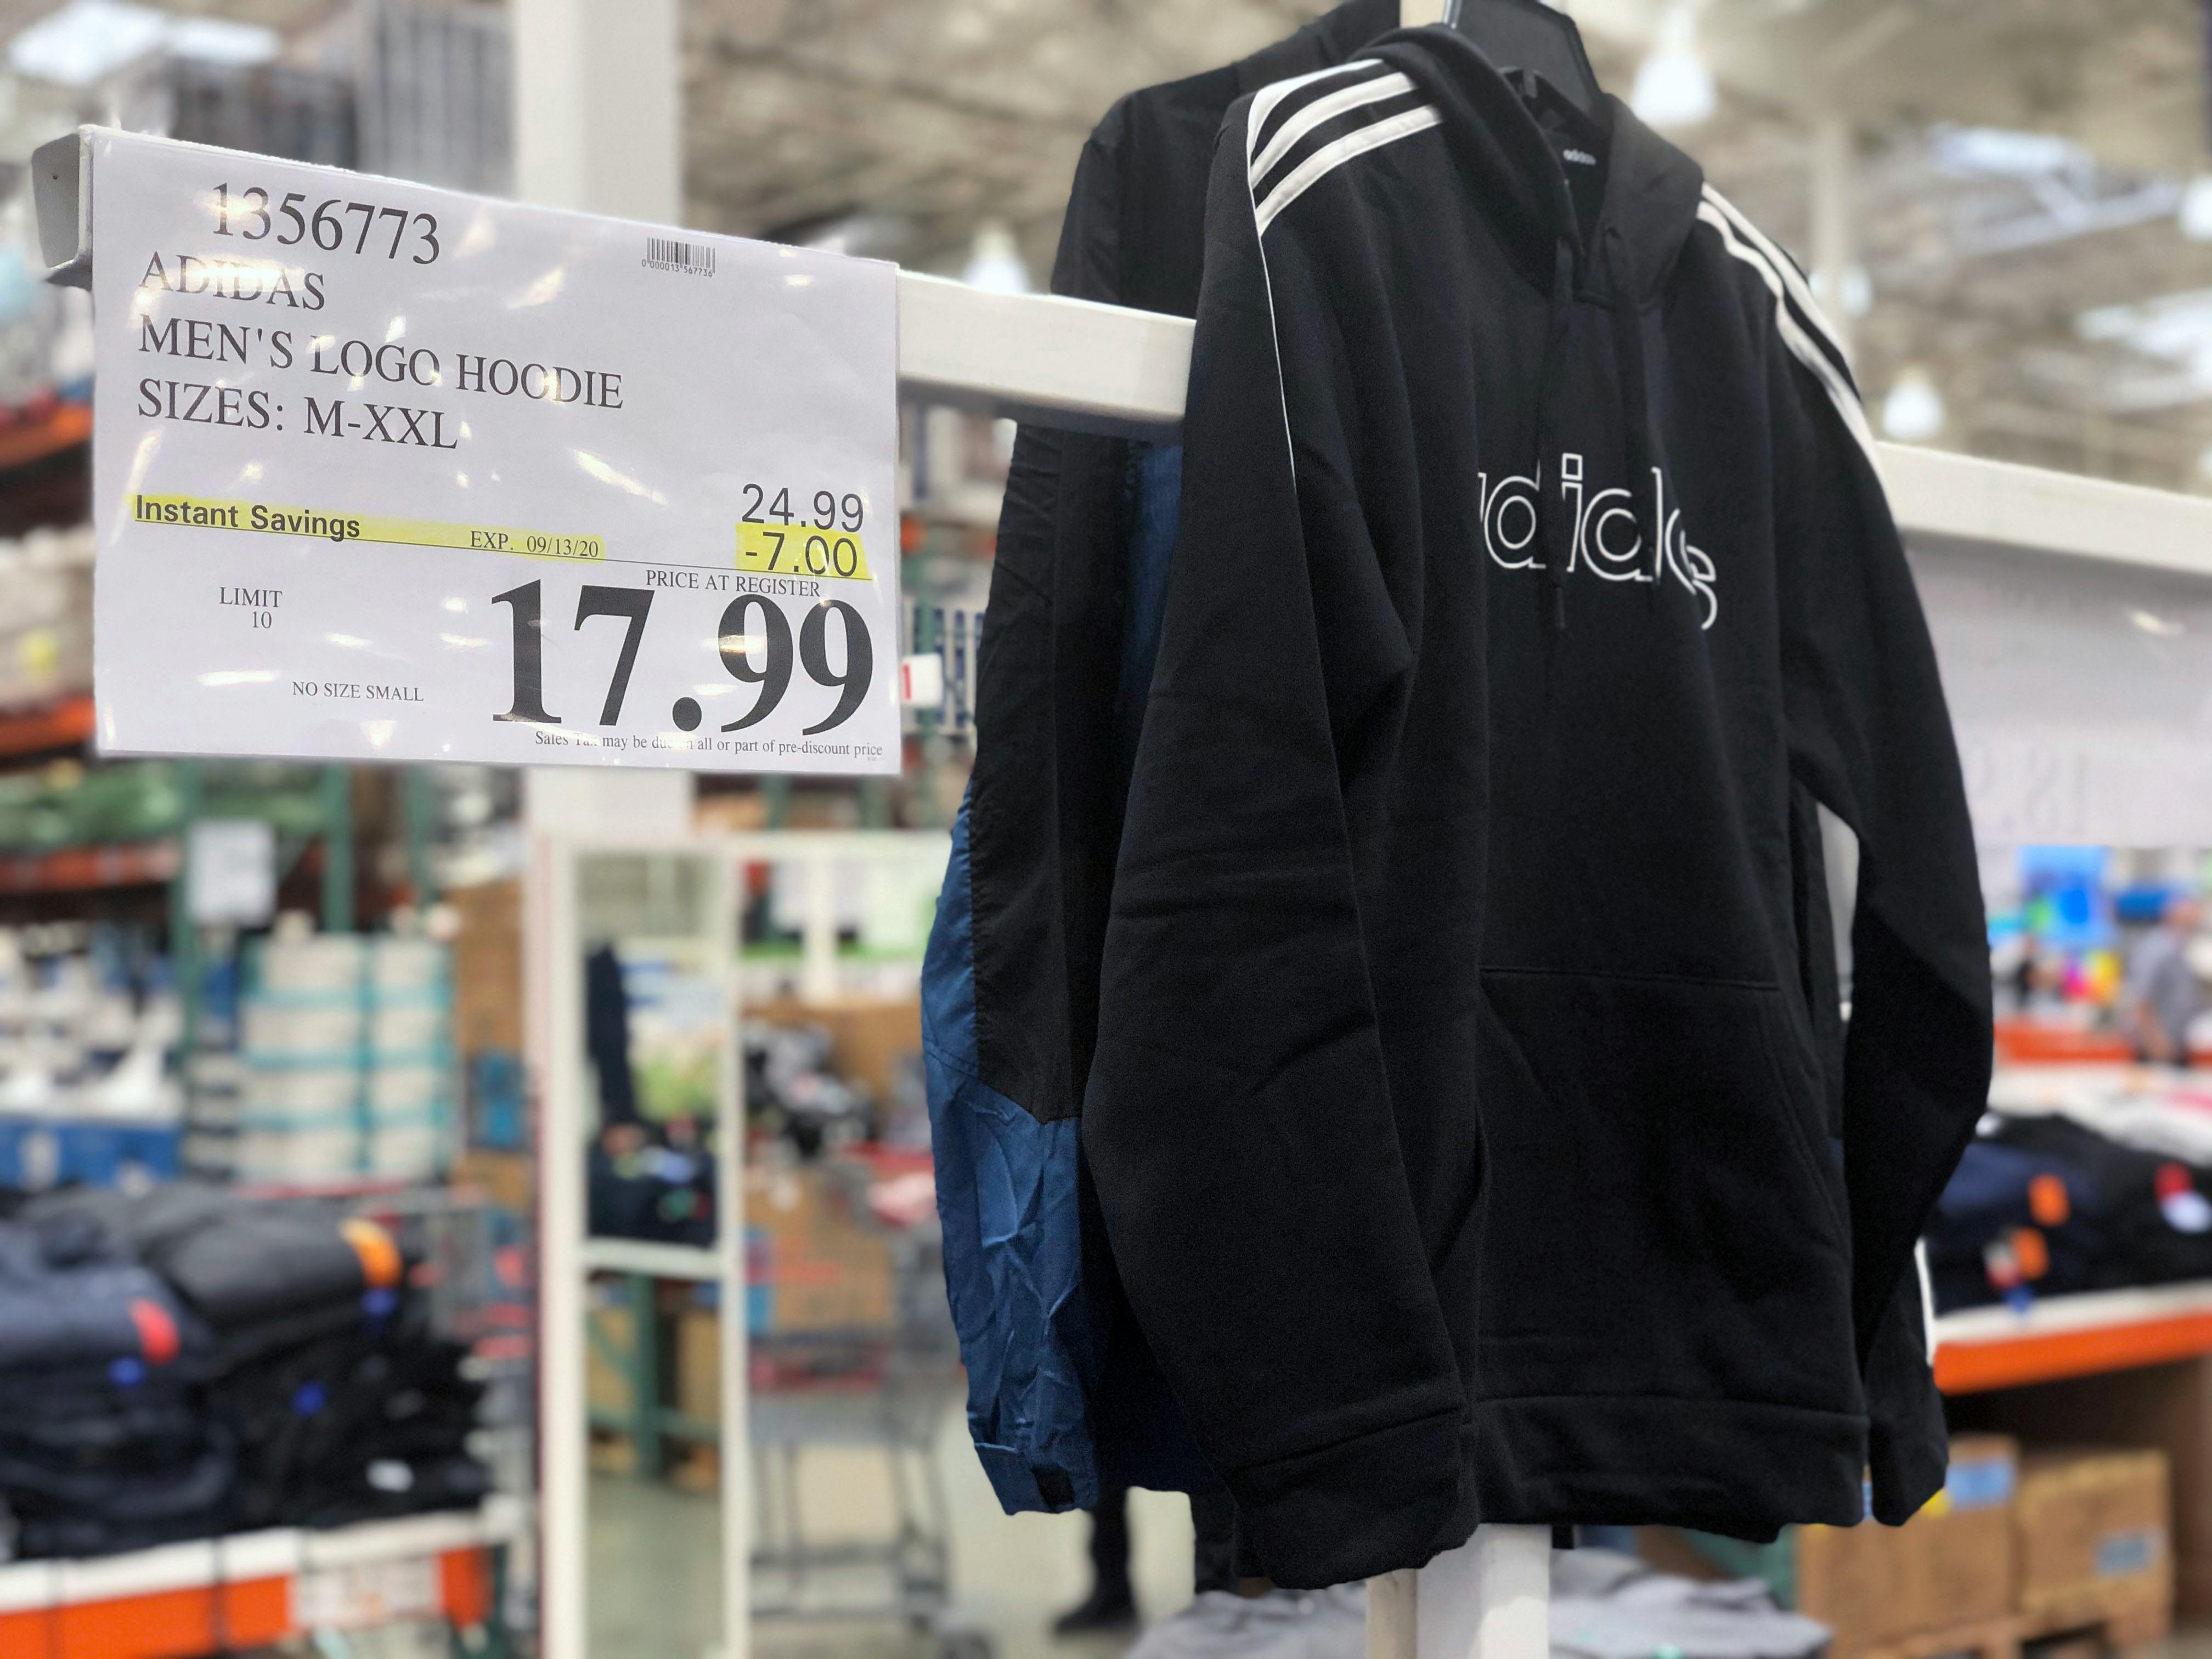 $17.99 Adidas Men's Hoodies at Costco 